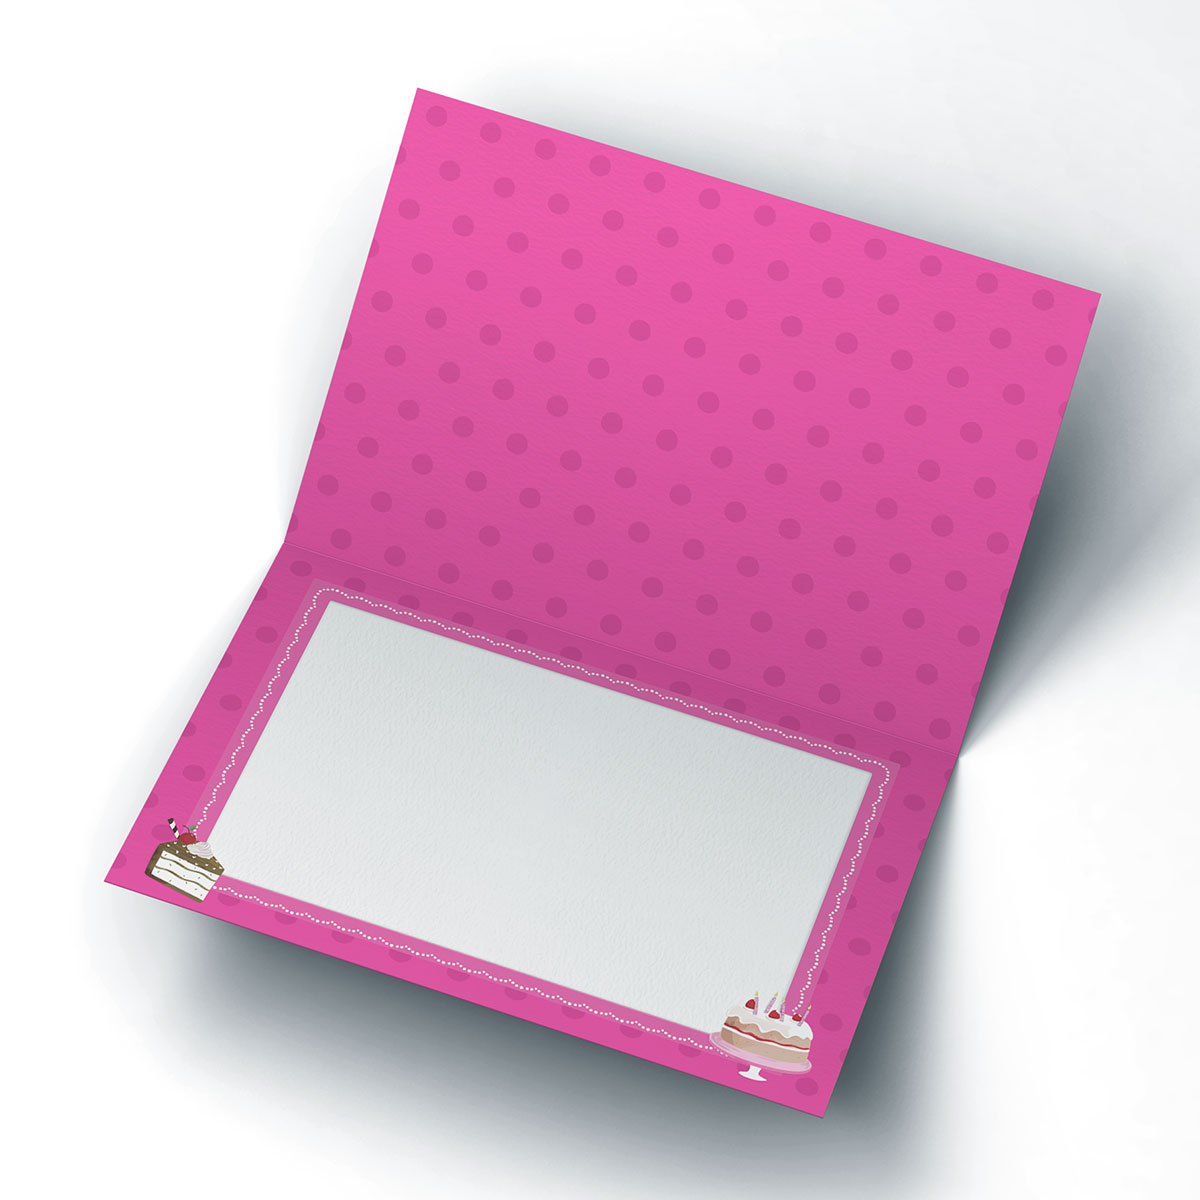 Photo Birthday Card - Pink Cake Frame